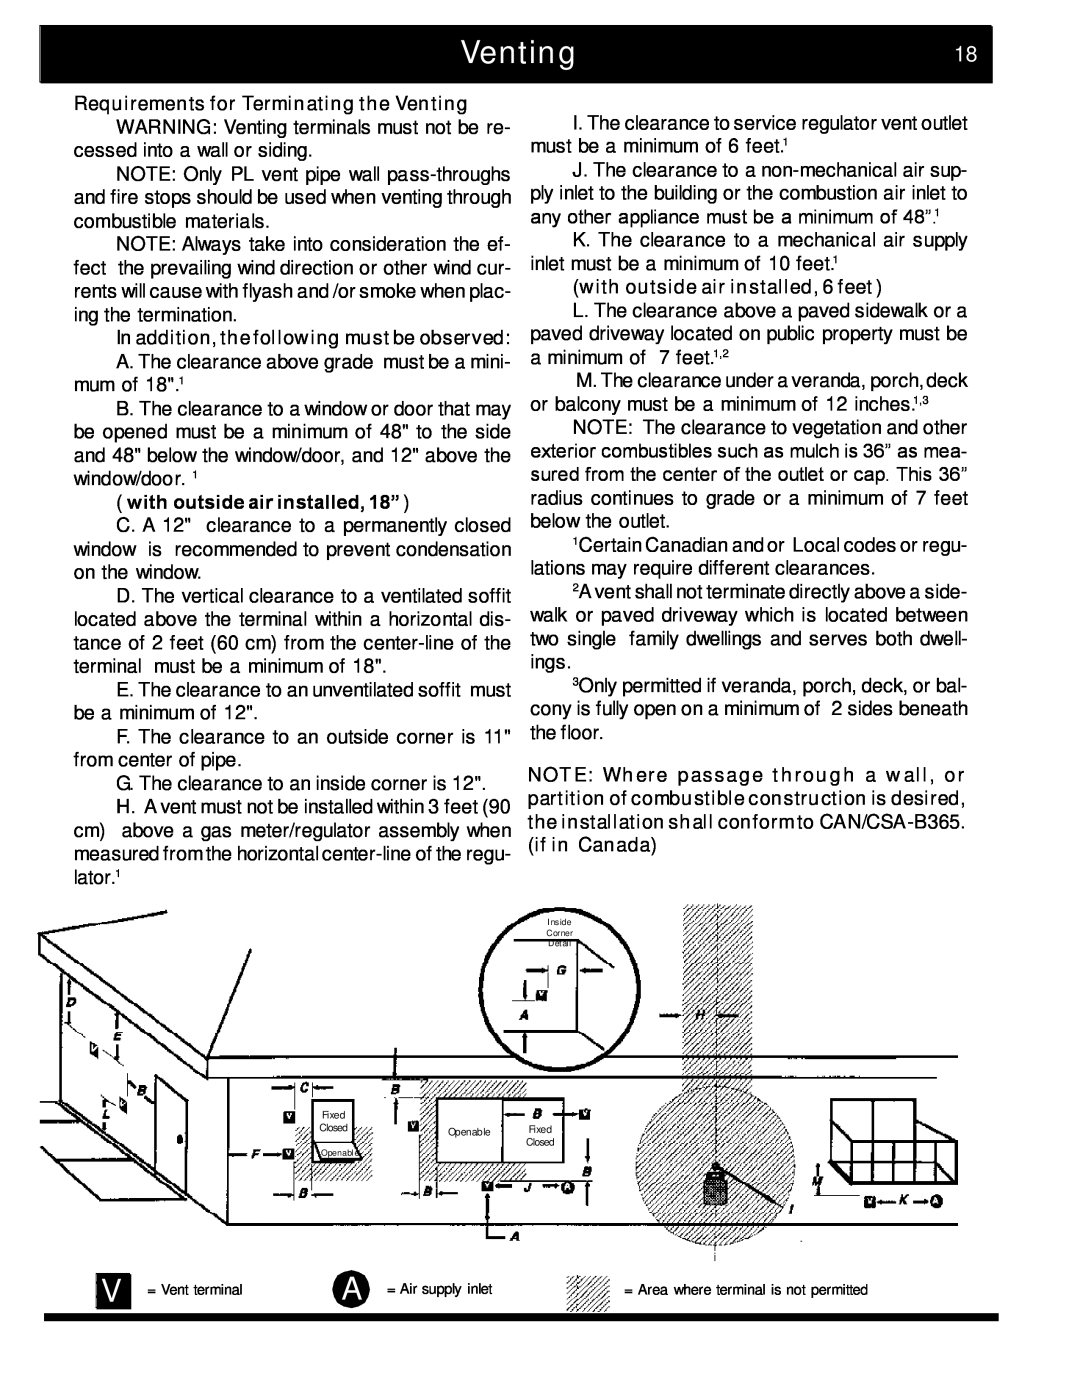 Harman Stove Company 2 manual Venting18, with outside air installed, 18”, with outside air installed, 6 feet 